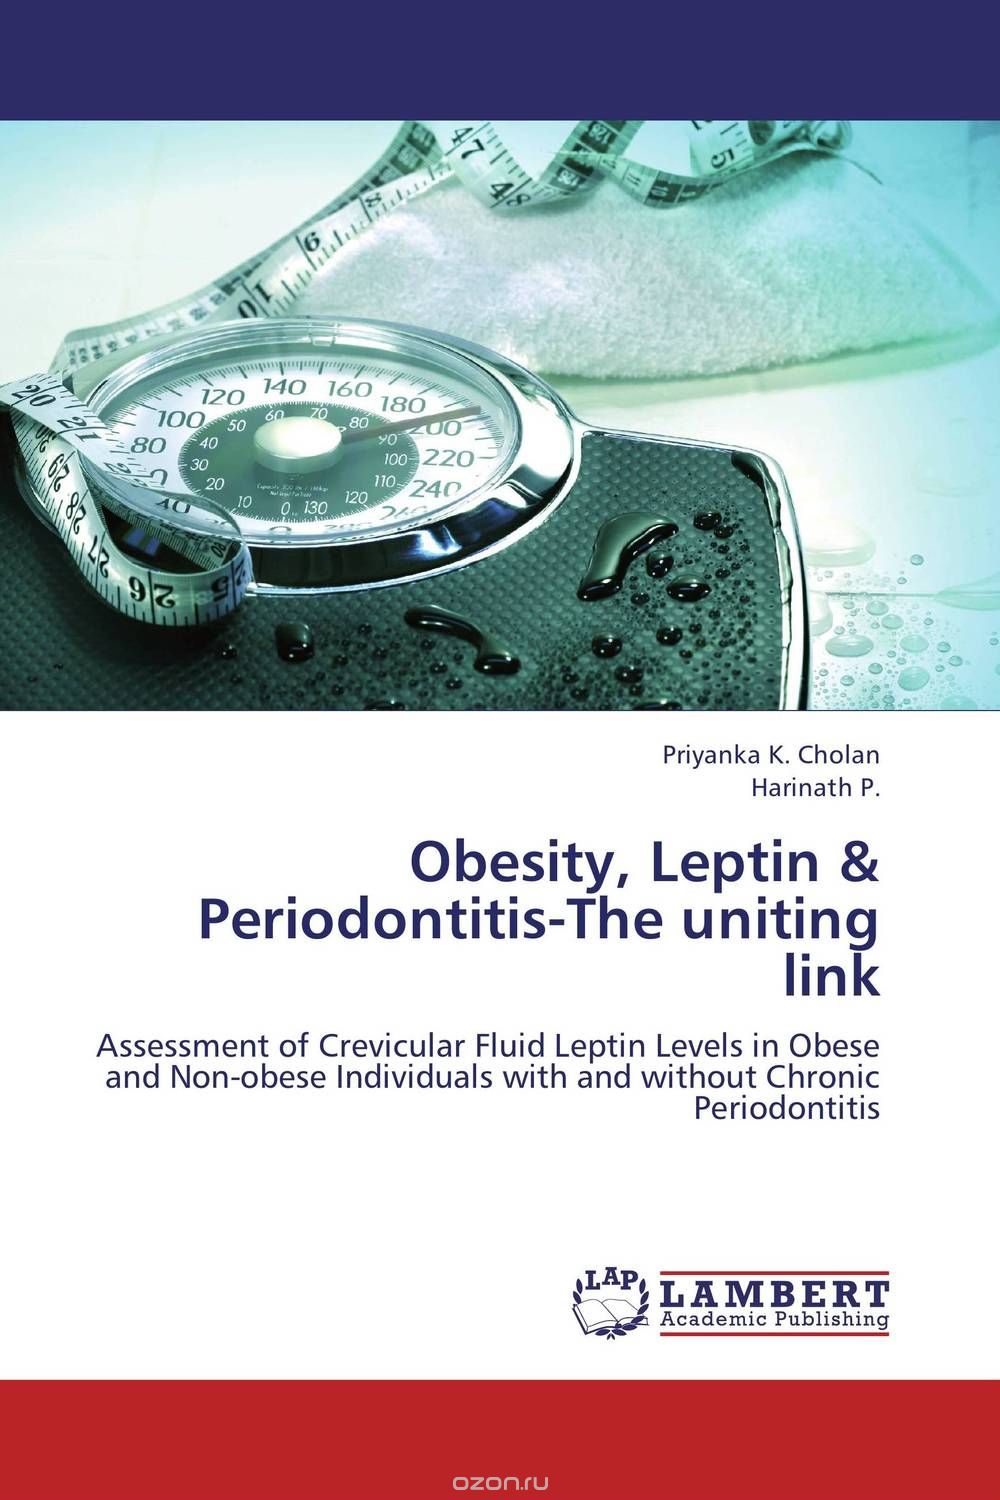 Скачать книгу "Obesity, Leptin & Periodontitis-The uniting link"